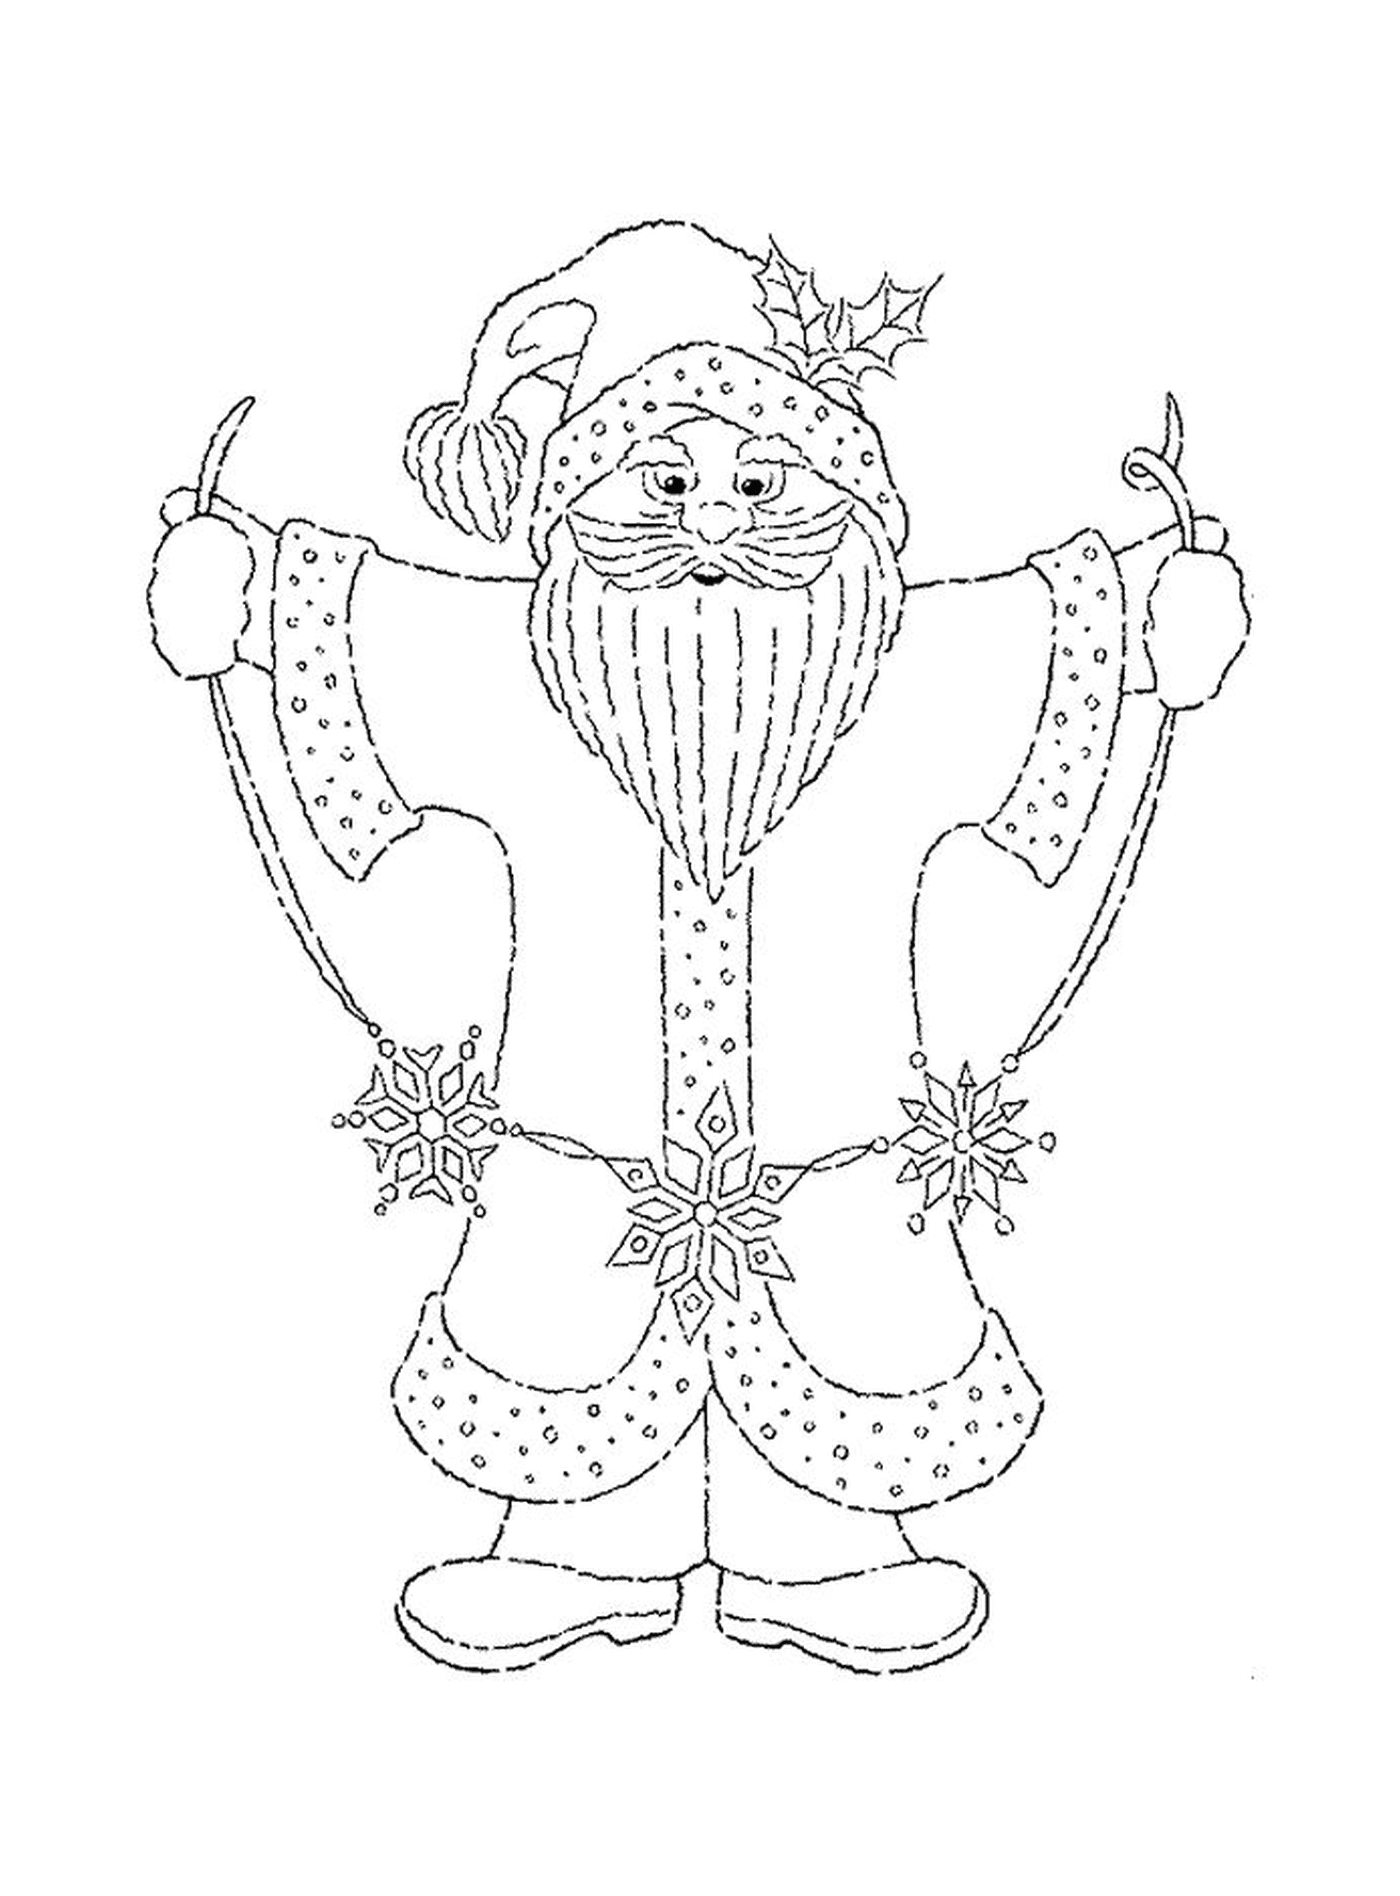  Santa Claus with a garland 